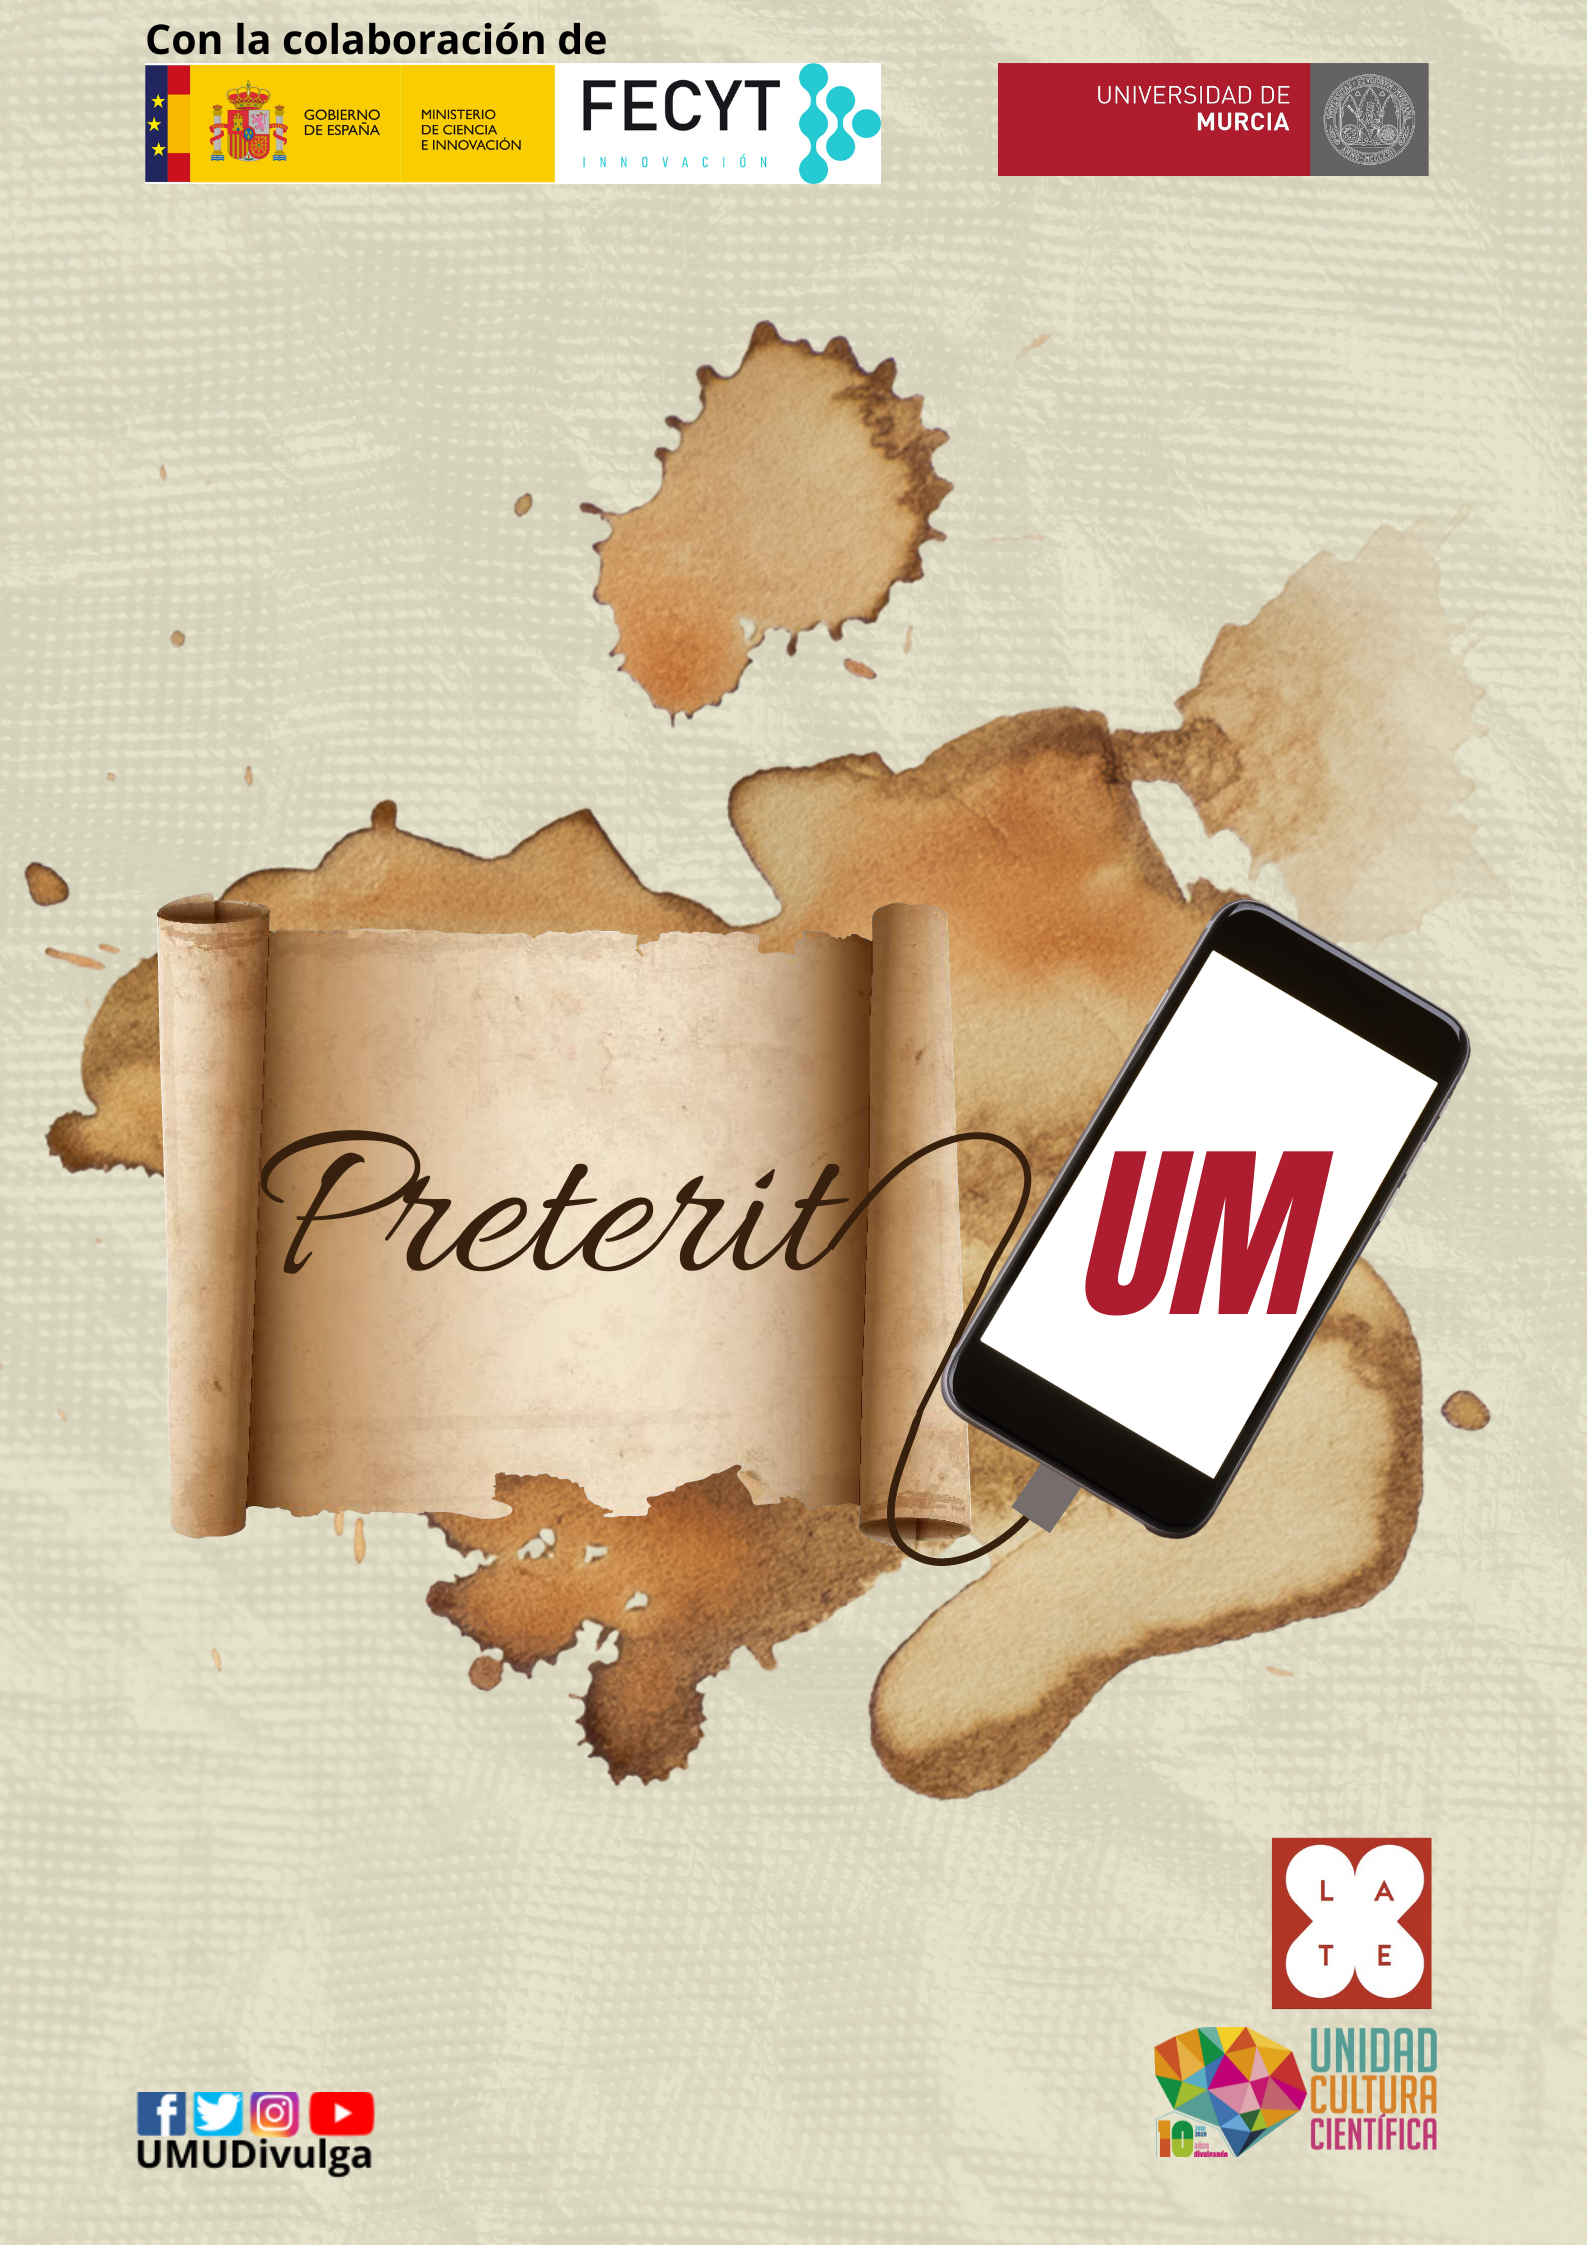 Nace PreteritUM, el proyecto UMU para combatir las fake news históricas